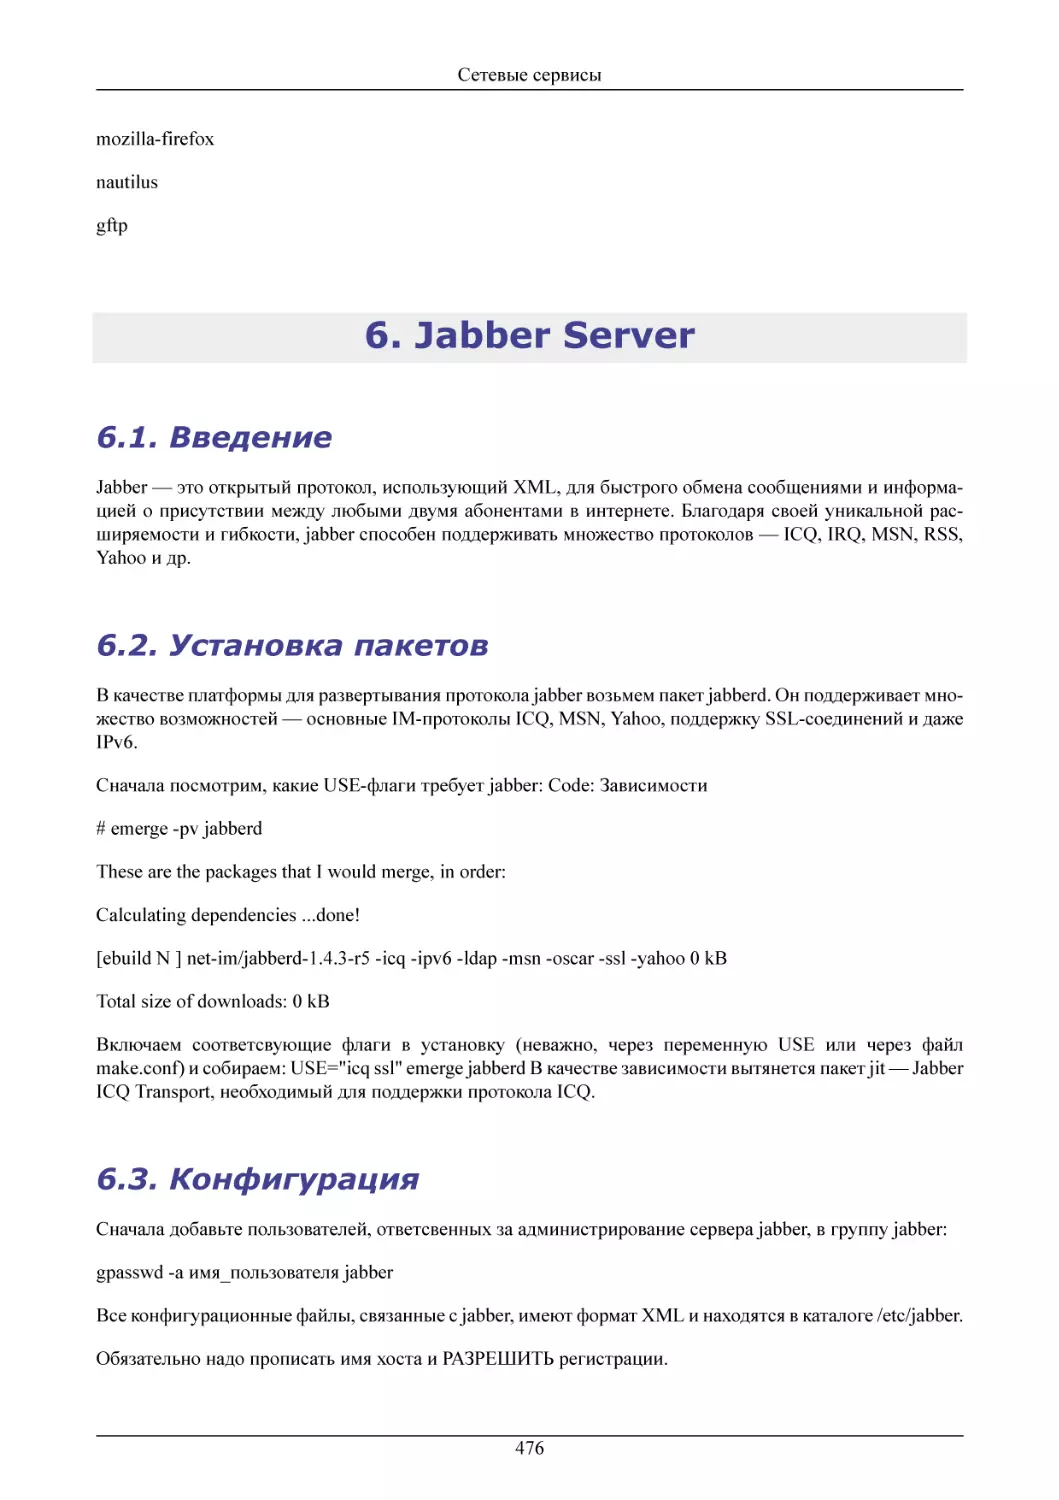 Jabber Server
Введение
Установка пакетов
Конфигурация